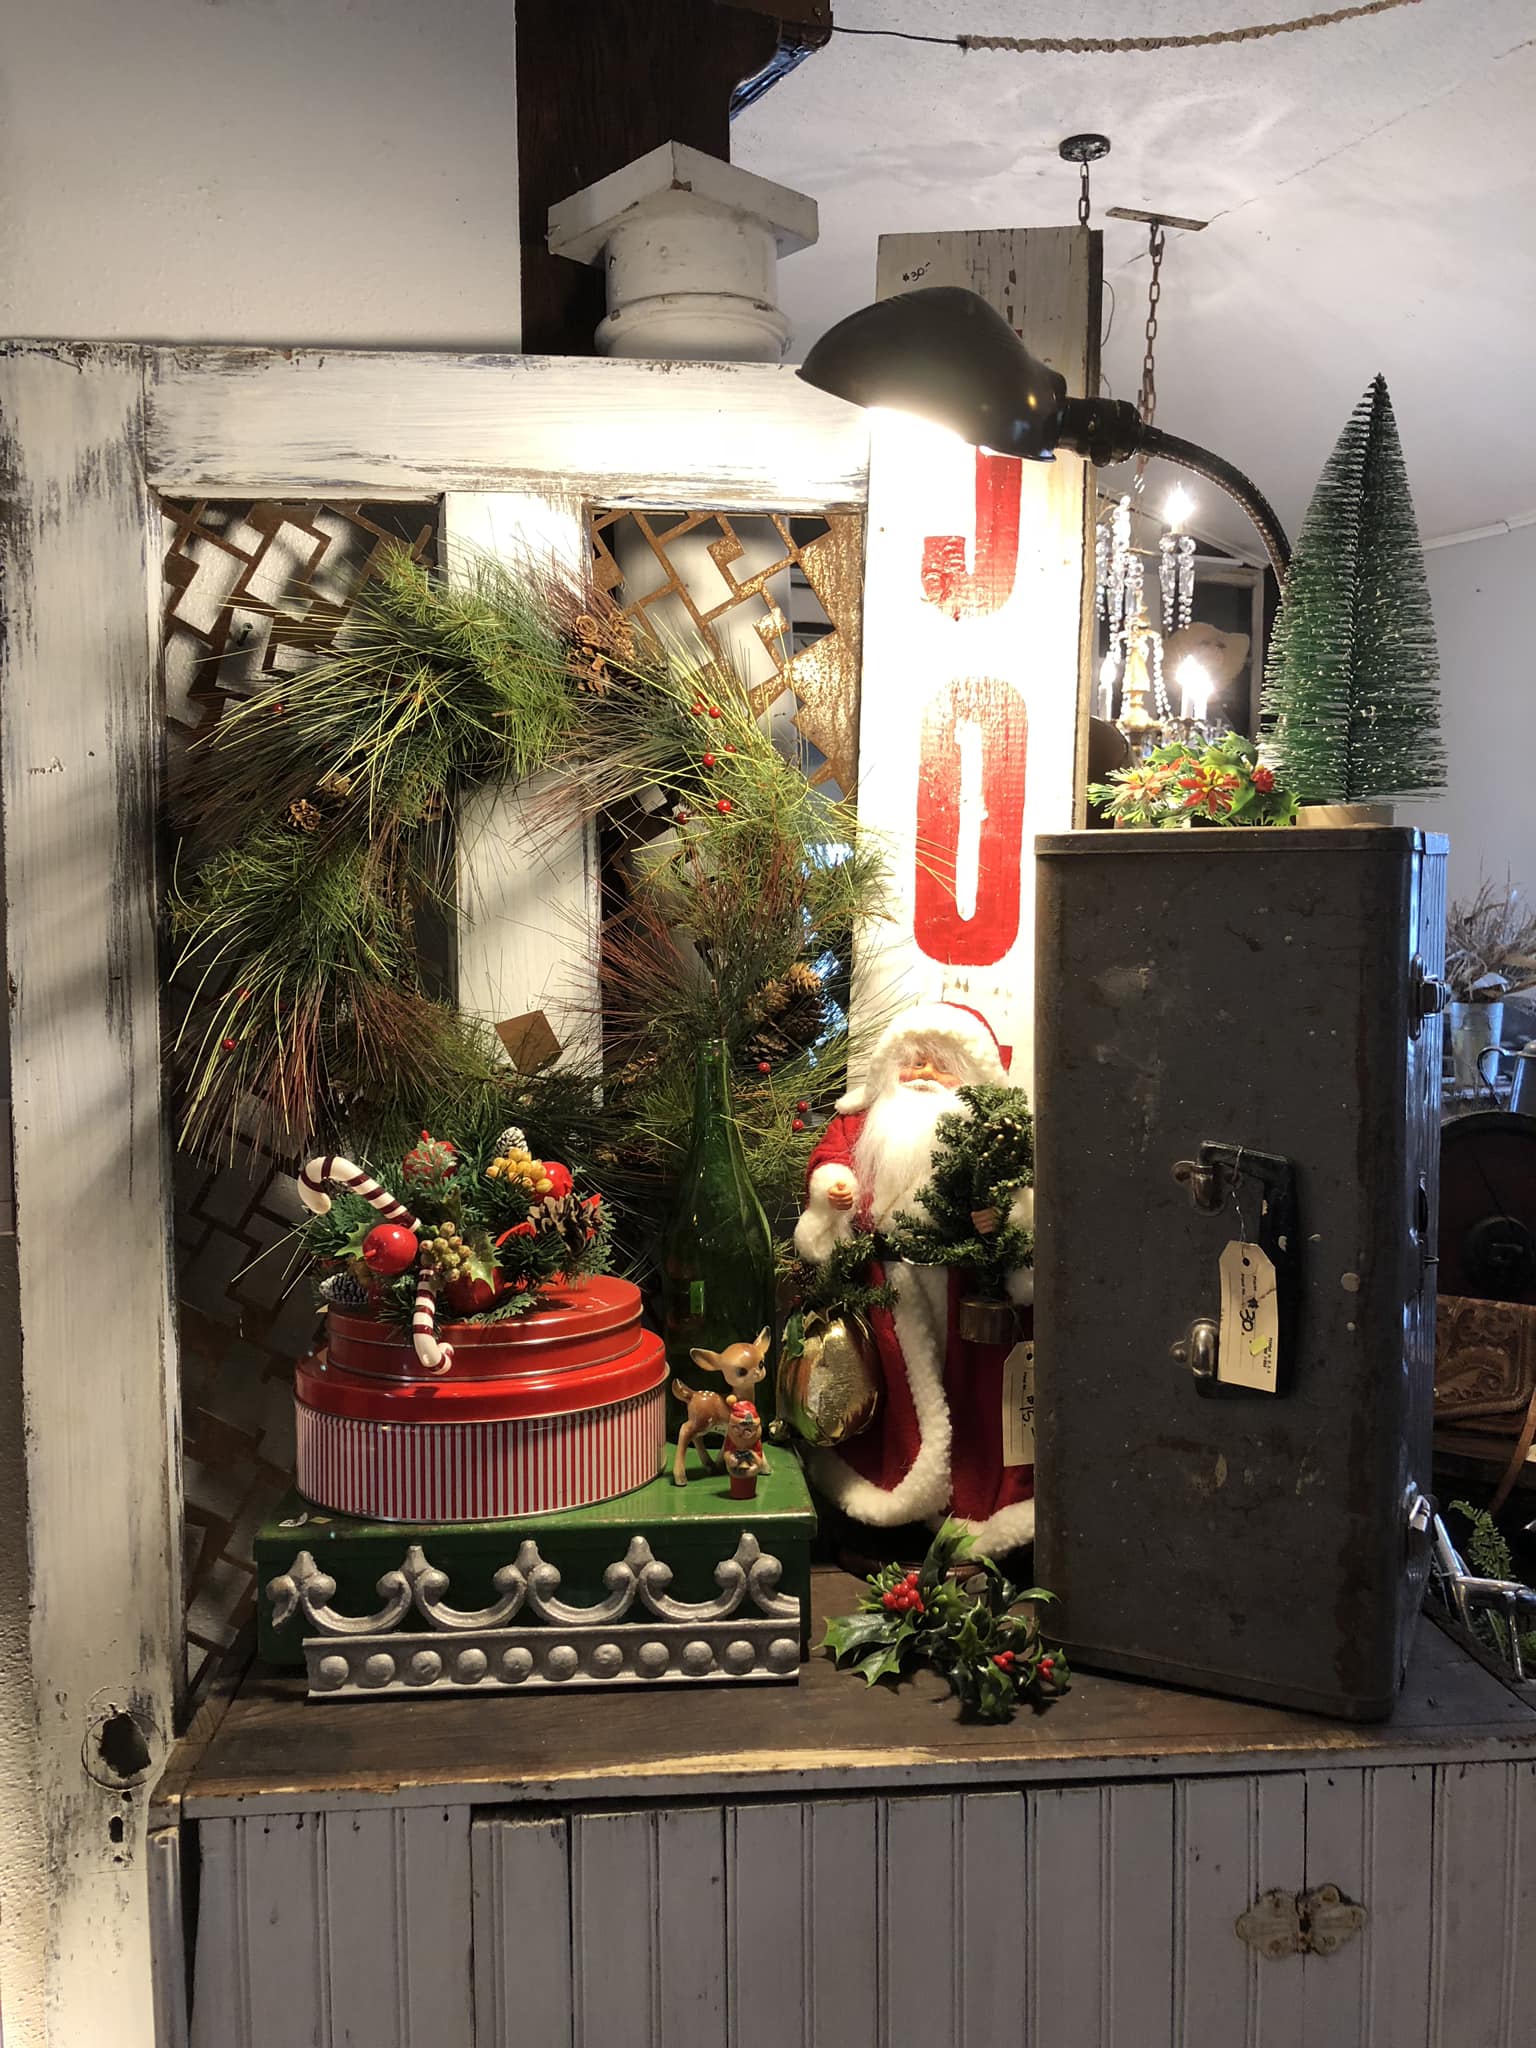 The Junk Parlor - Blowout sale preview items, Christmas decor, wreath